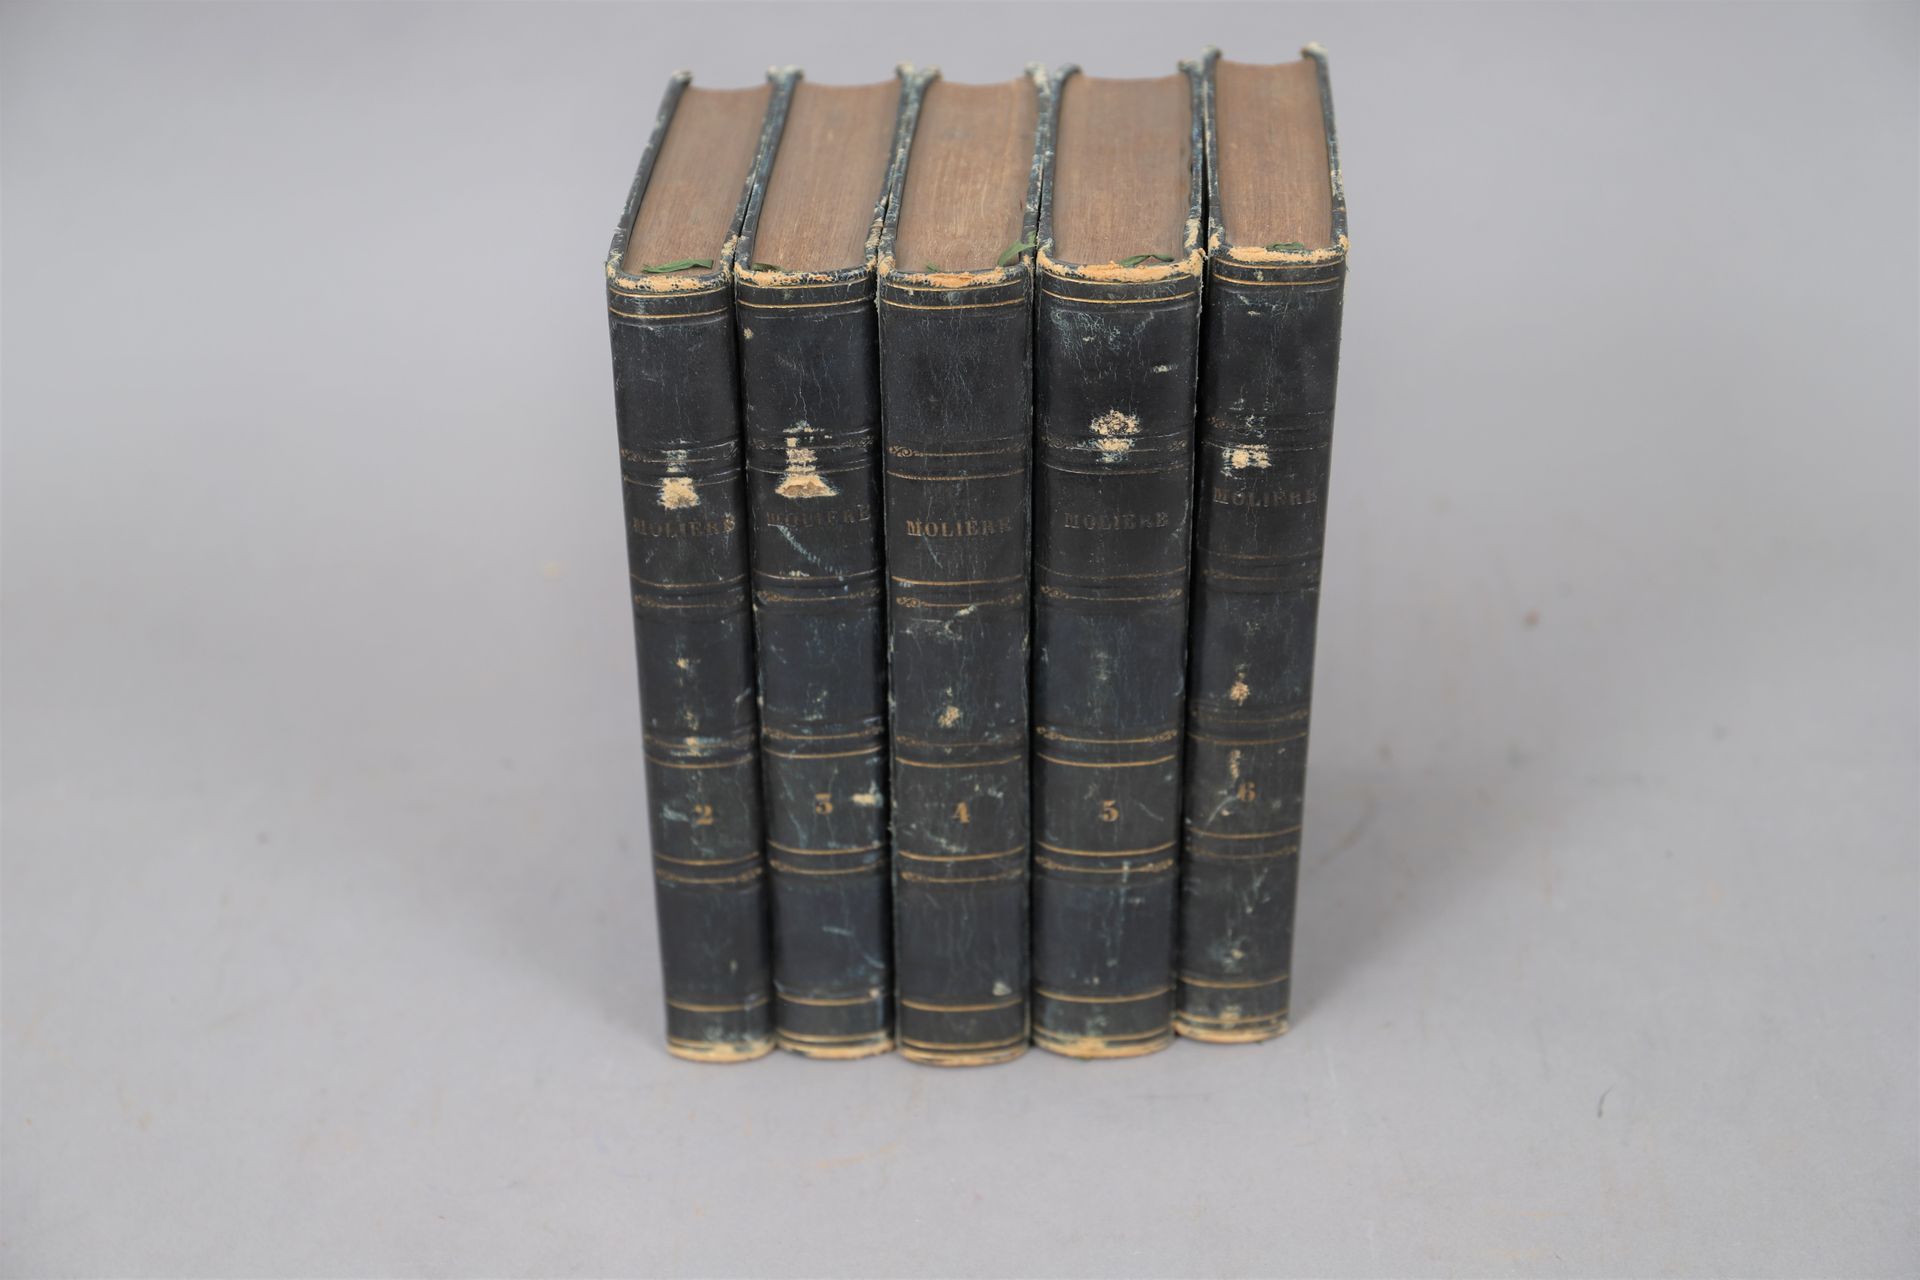 Null ŒUVRES de MOLIERE

Vers 1850

5 volumes reliés.